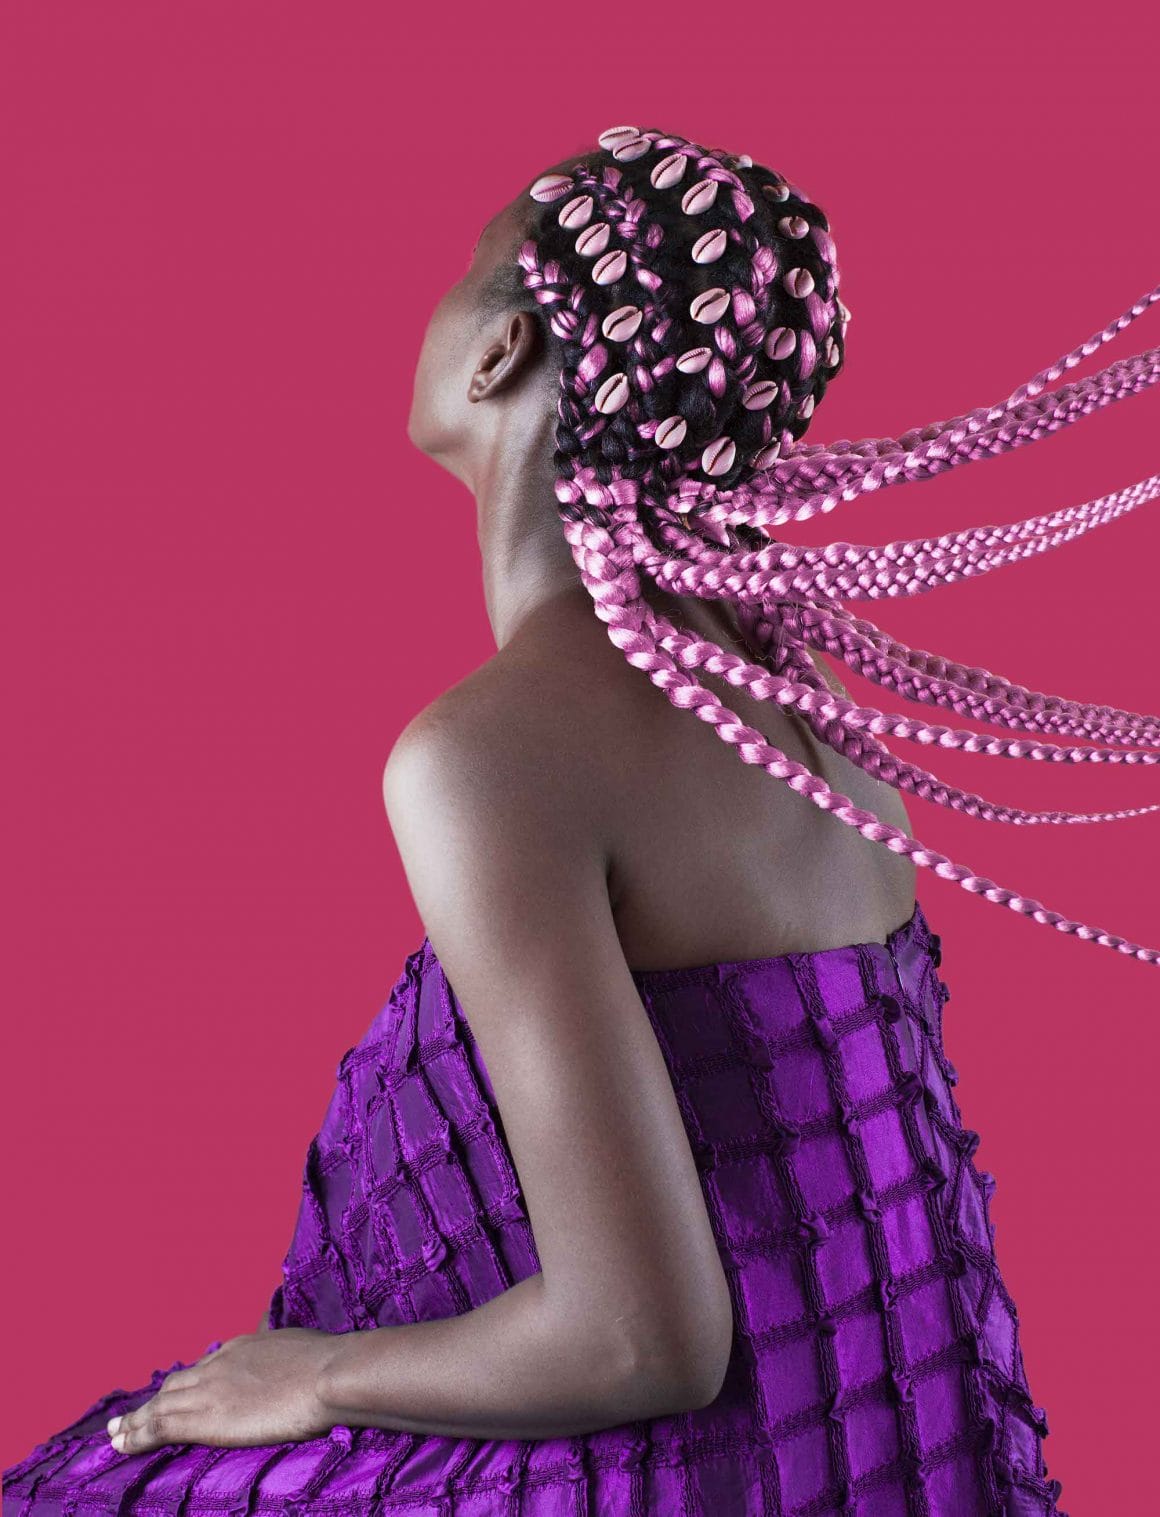 Pink Didi with Cowry Shell photographie de coiffure nigeriane par Medina Dugger